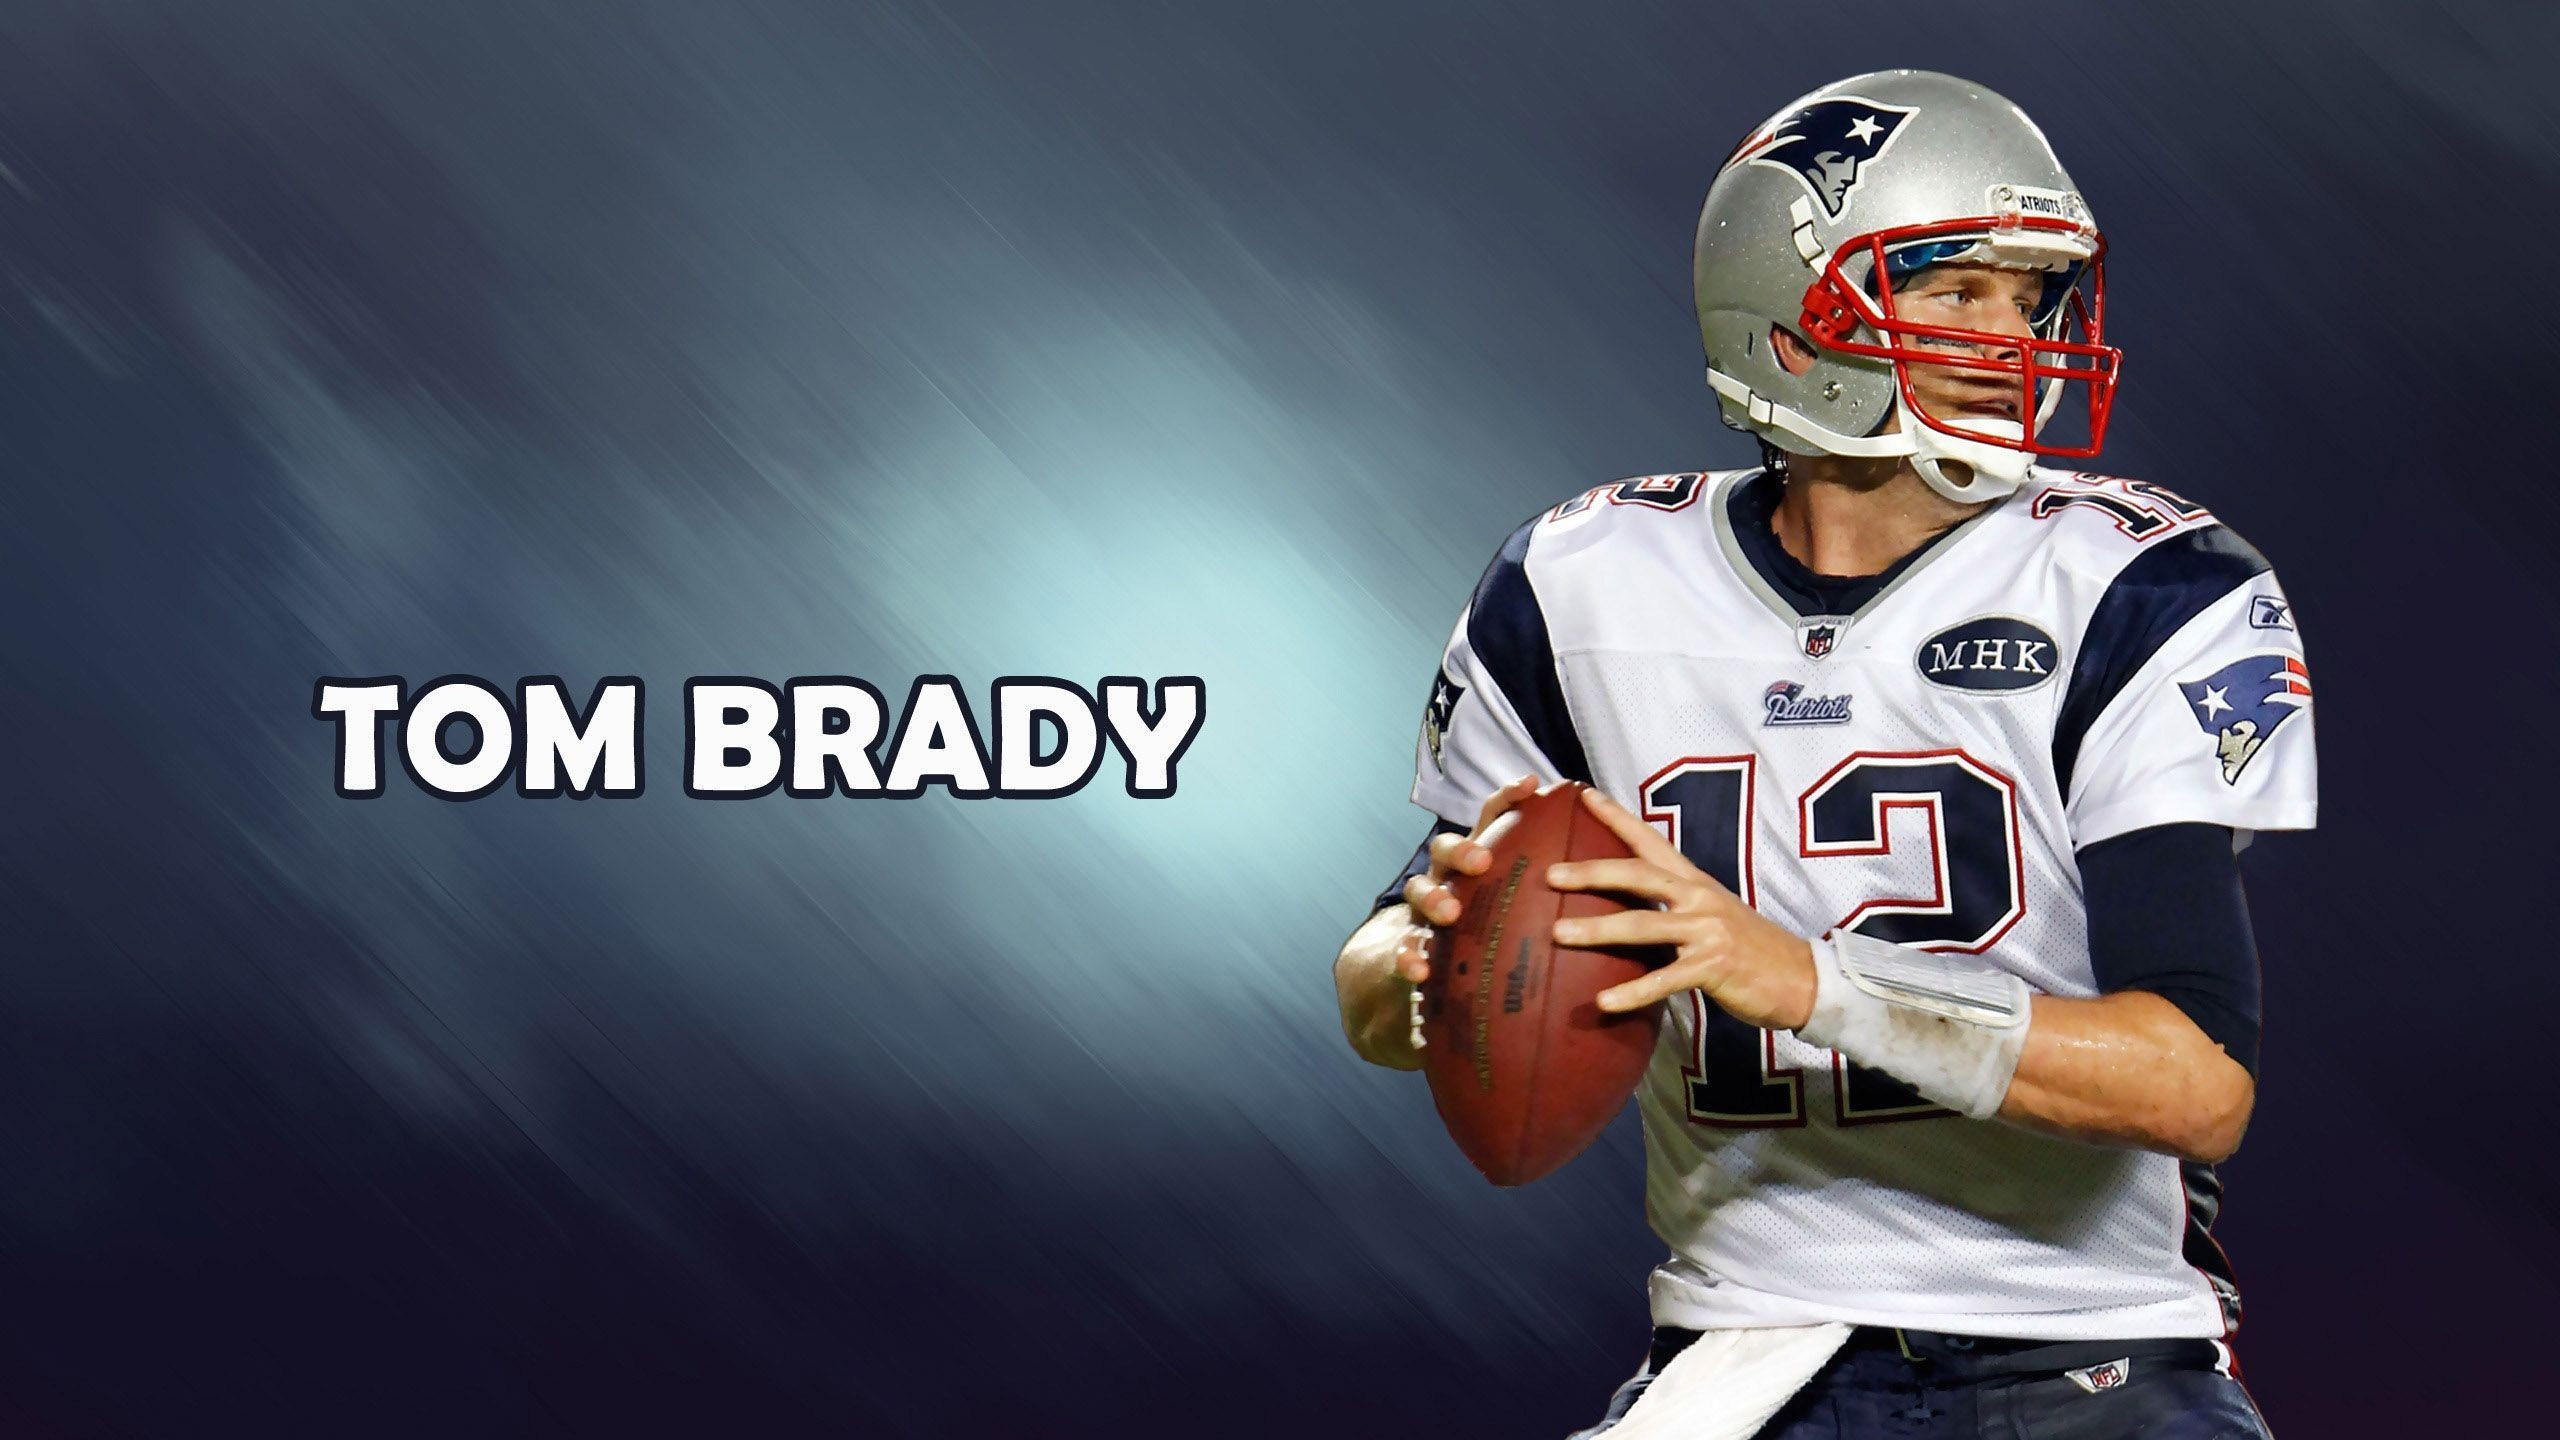 Tom Brady New England Patriots for 2560x1440 HDTV resolution